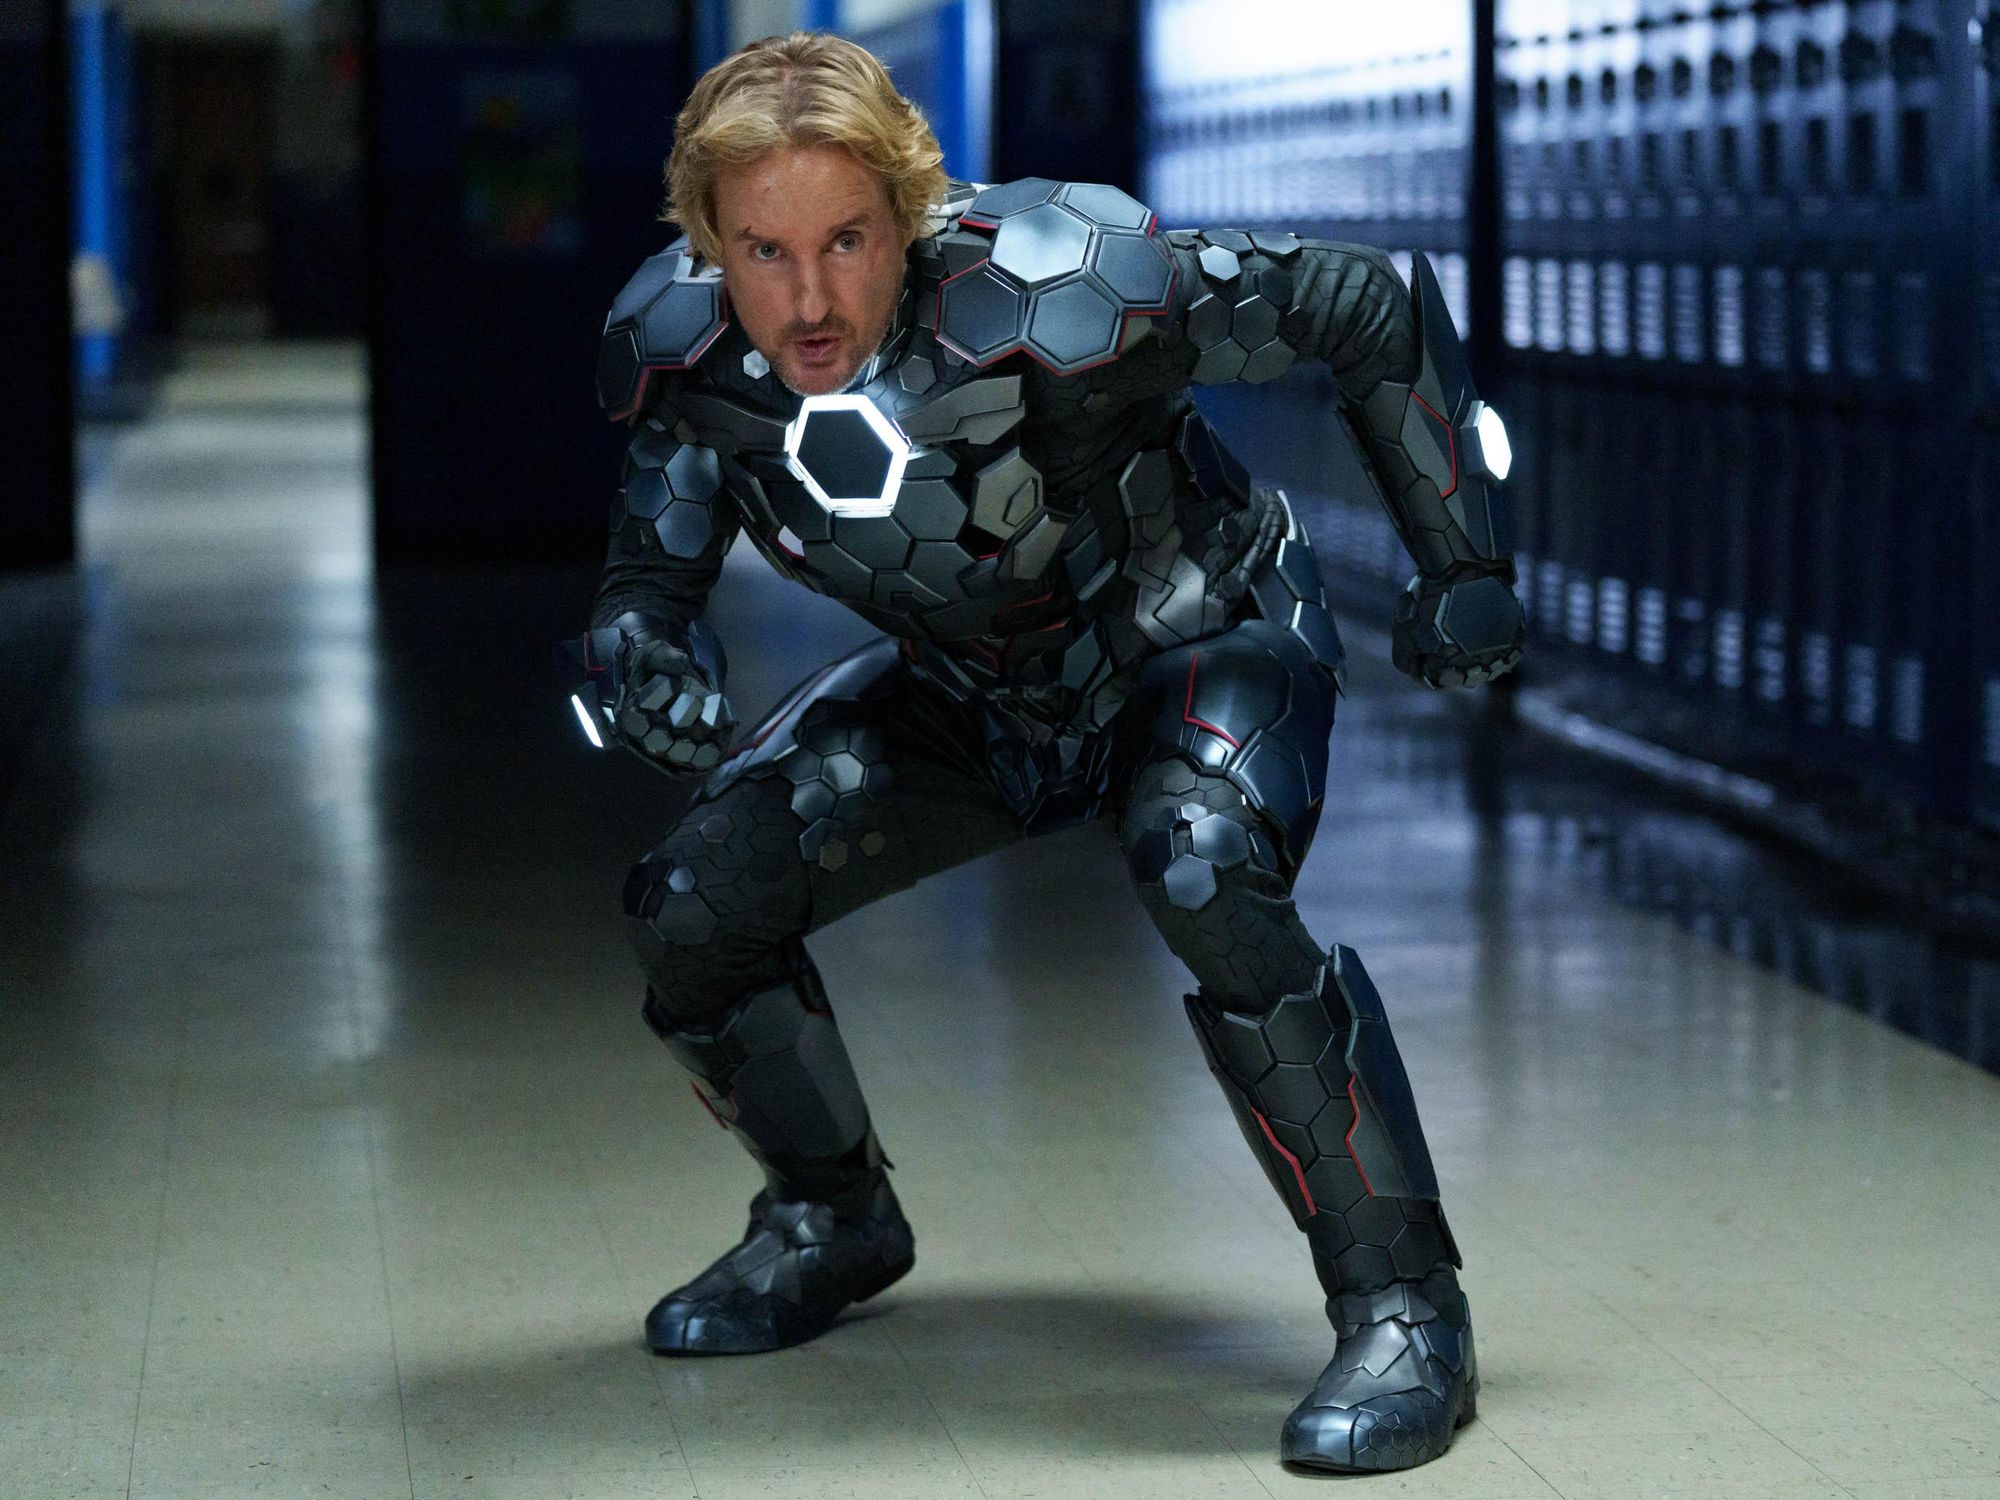 Owen Wilson as Jack standing in a school hallway in a metal superhero costume